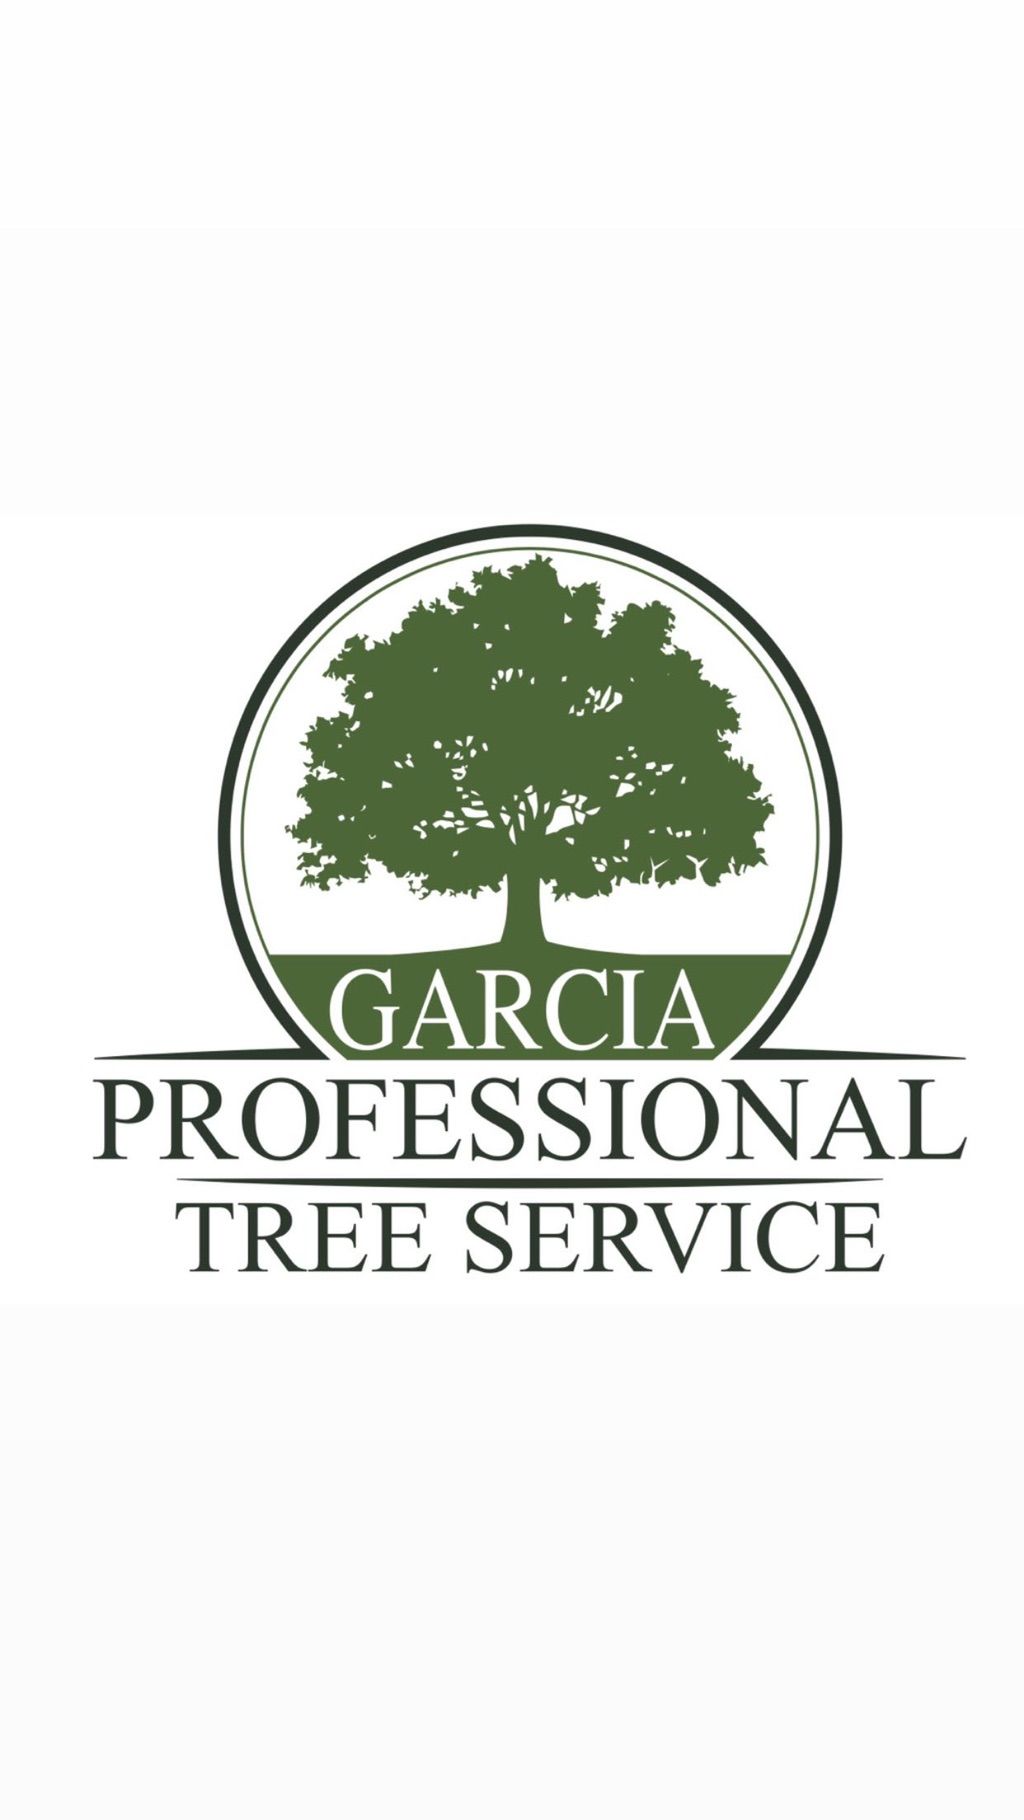 Garcia Professional Tree Service